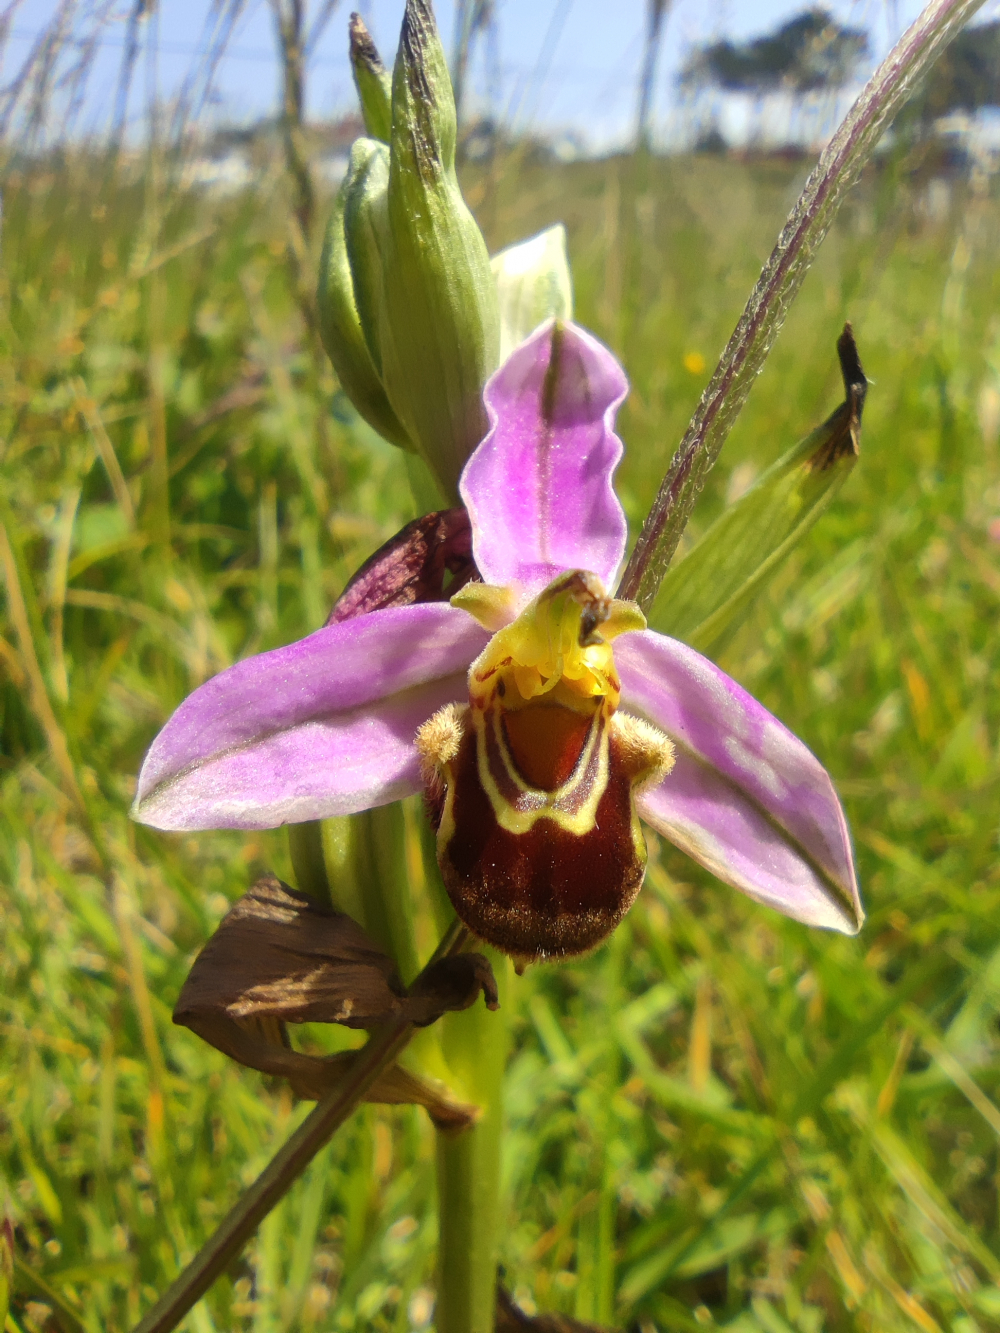 Abelleira - Ophrys apifera Huds.